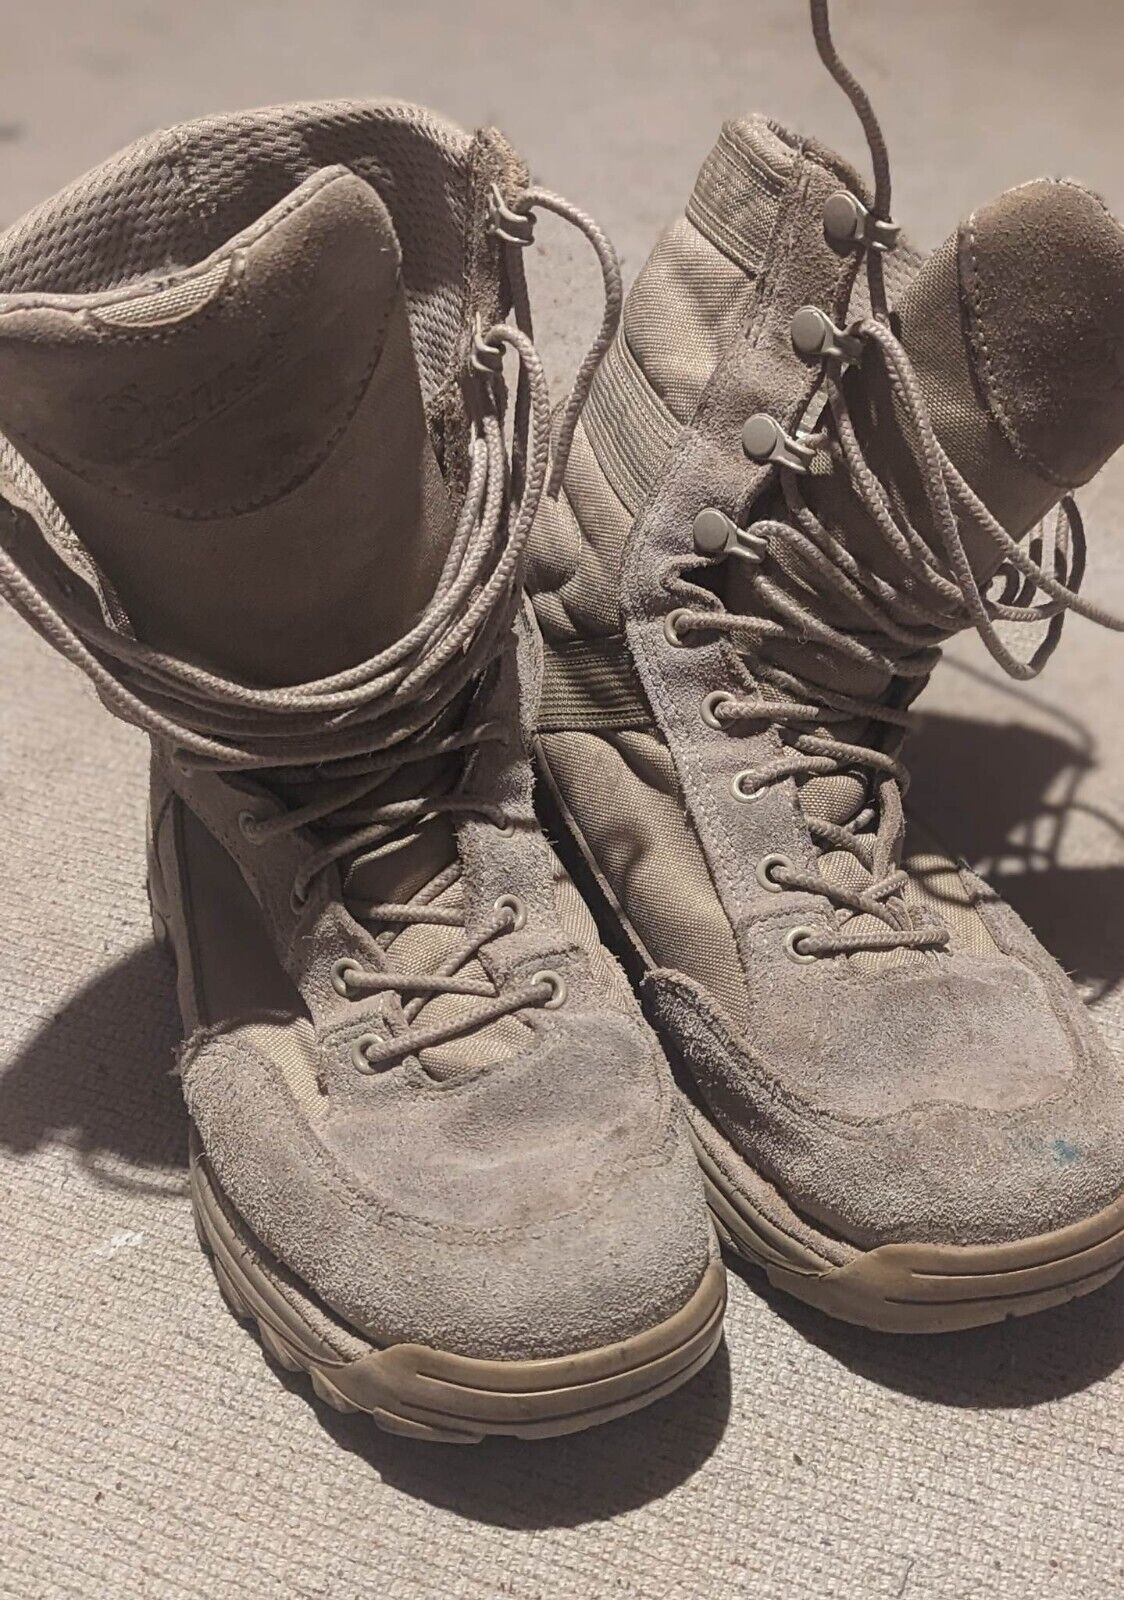 US Army/USMC desert camo boots